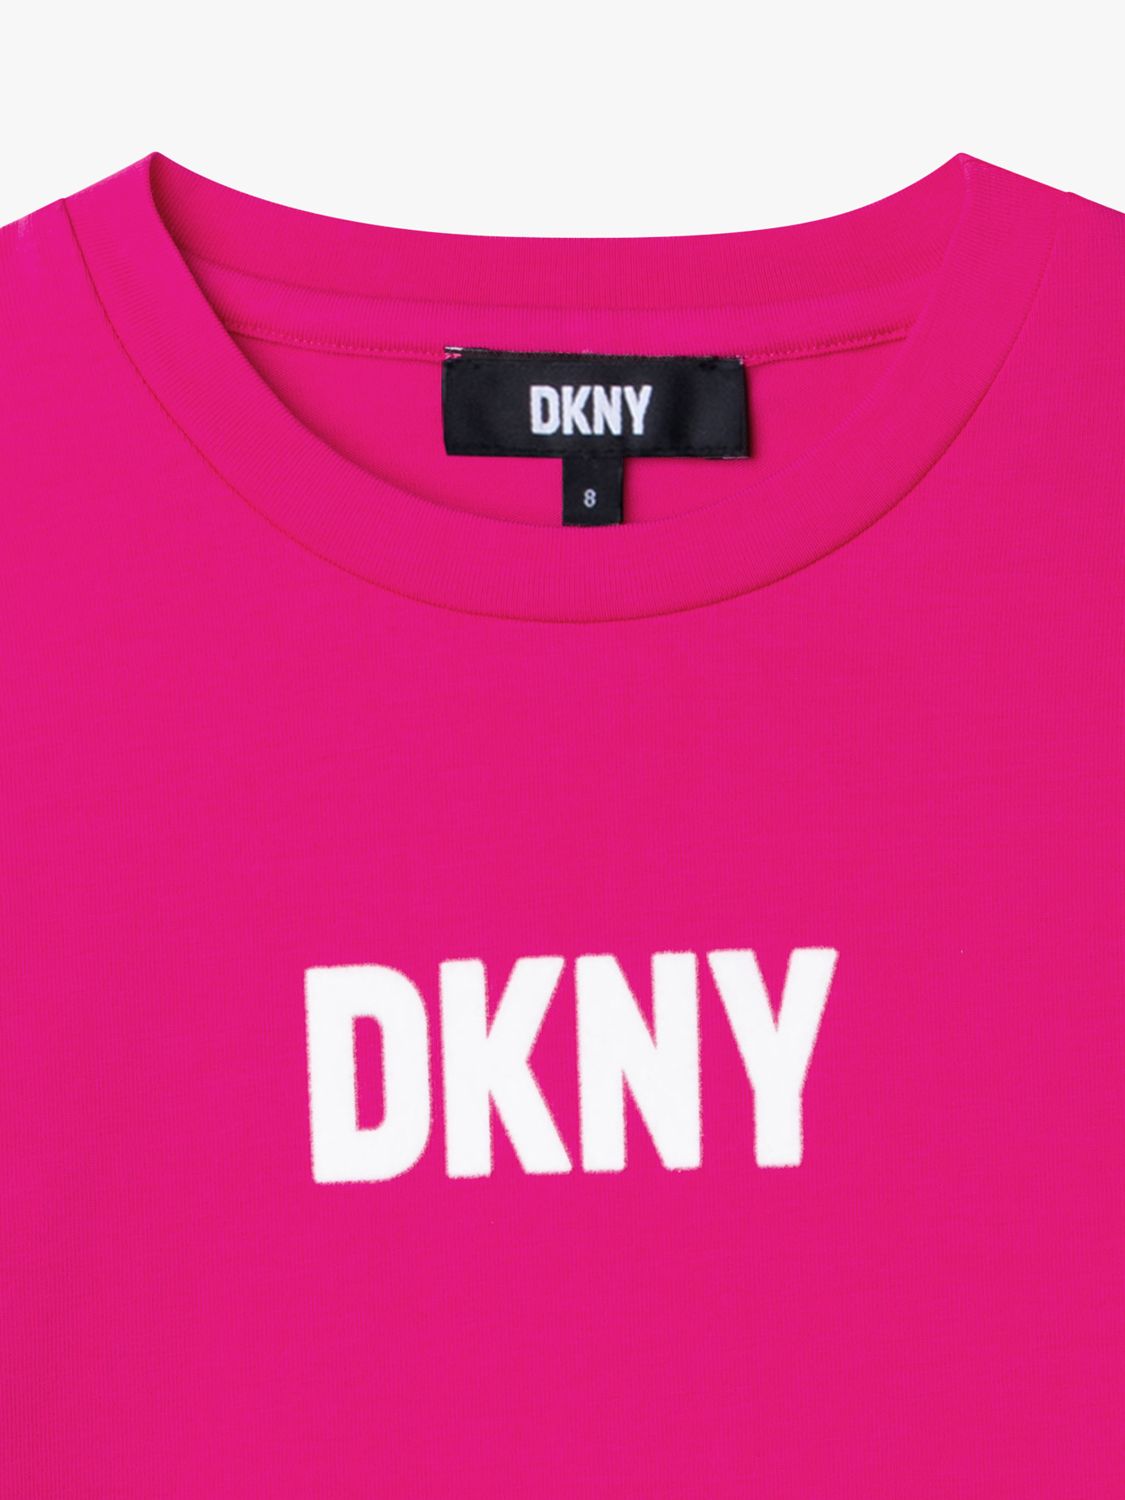 DKNY Kids' Logo Long Sleeve Top, Bright Pink at John Lewis & Partners